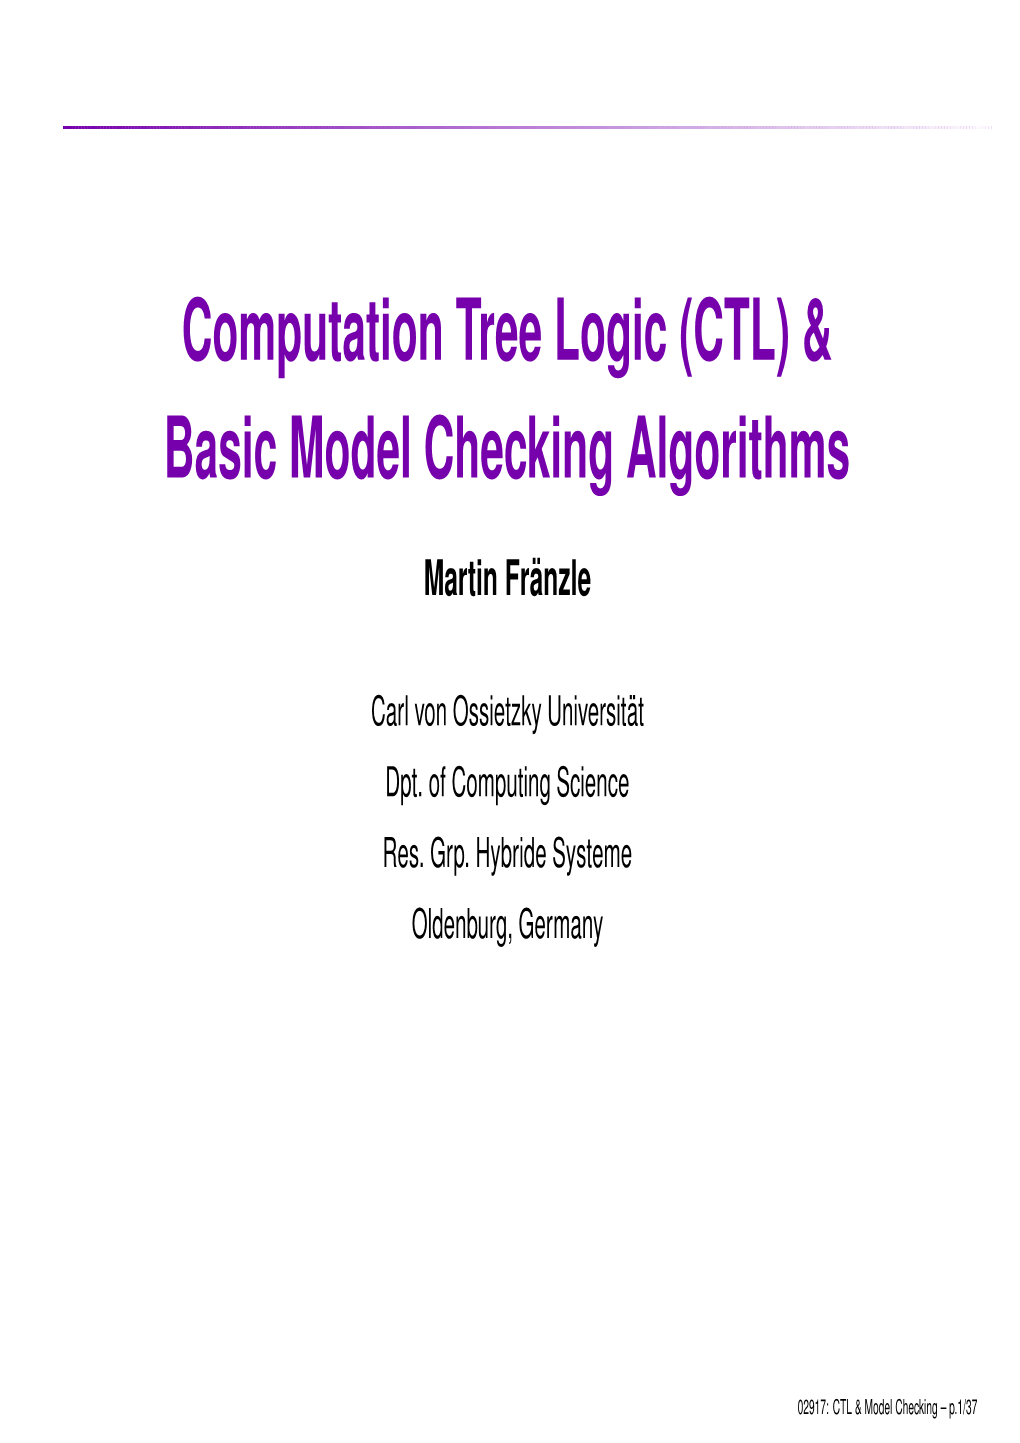 Computation Tree Logic (CTL) & Basic Model Checking Algorithms